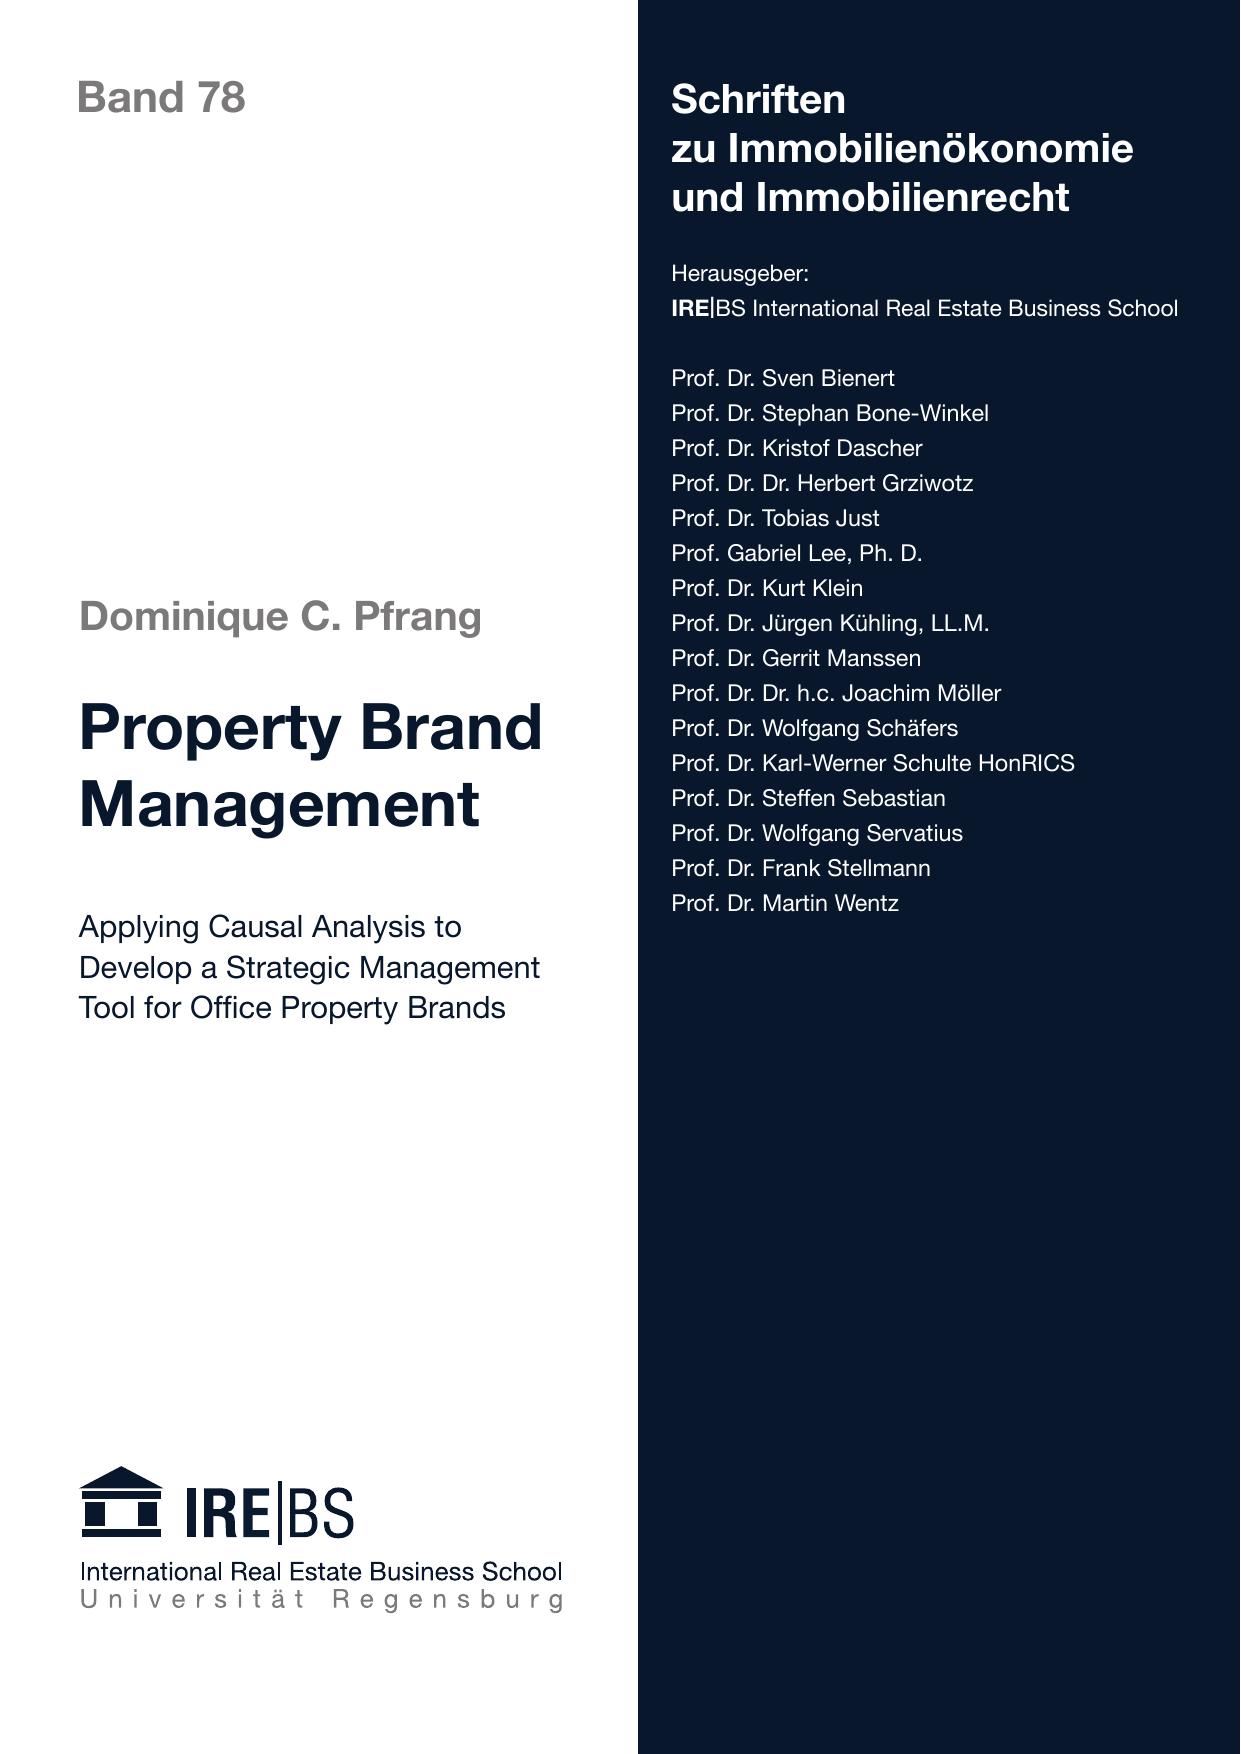 Property Brand Management 2015